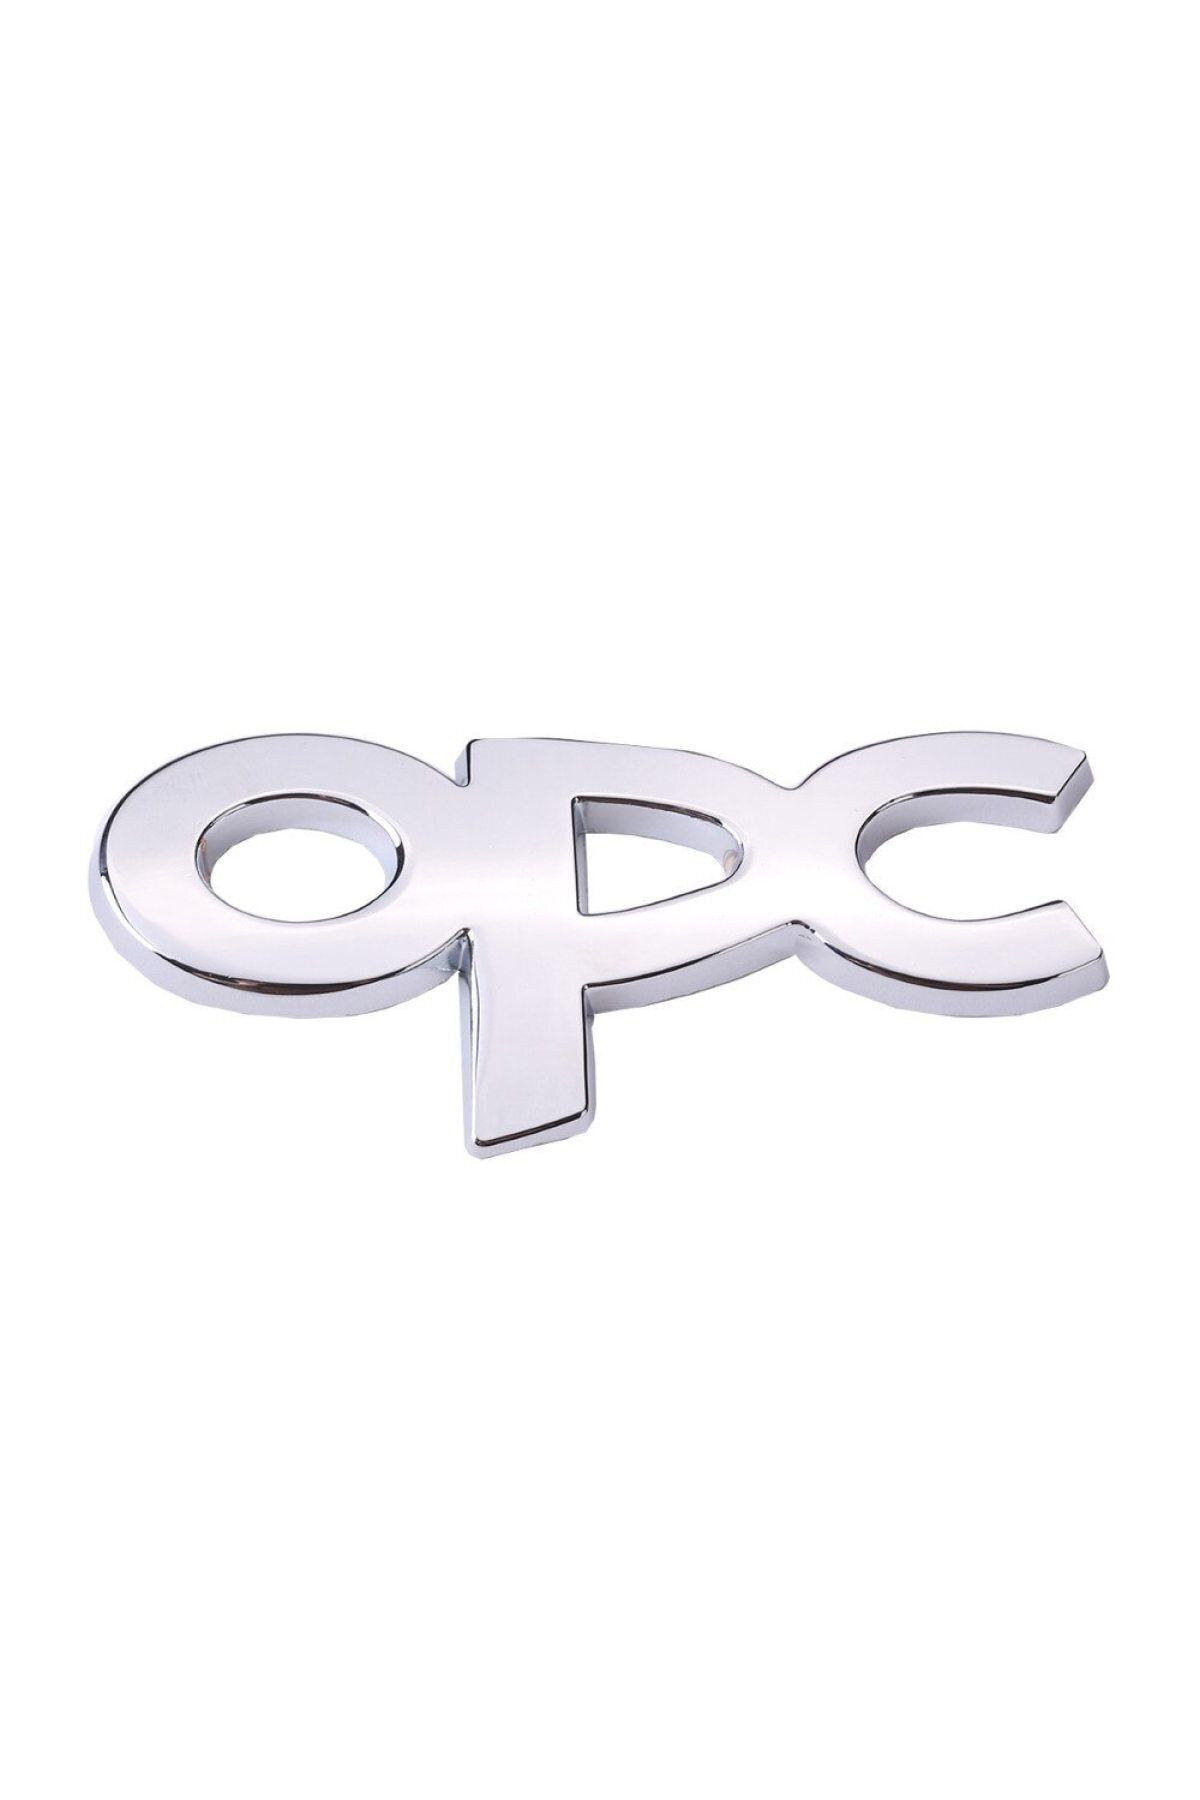 GARDENAUTO Opel Opc Uyumlu Bagaj Sticker Çamurluk Arma Bagaj Rozet Opc 2 Adet